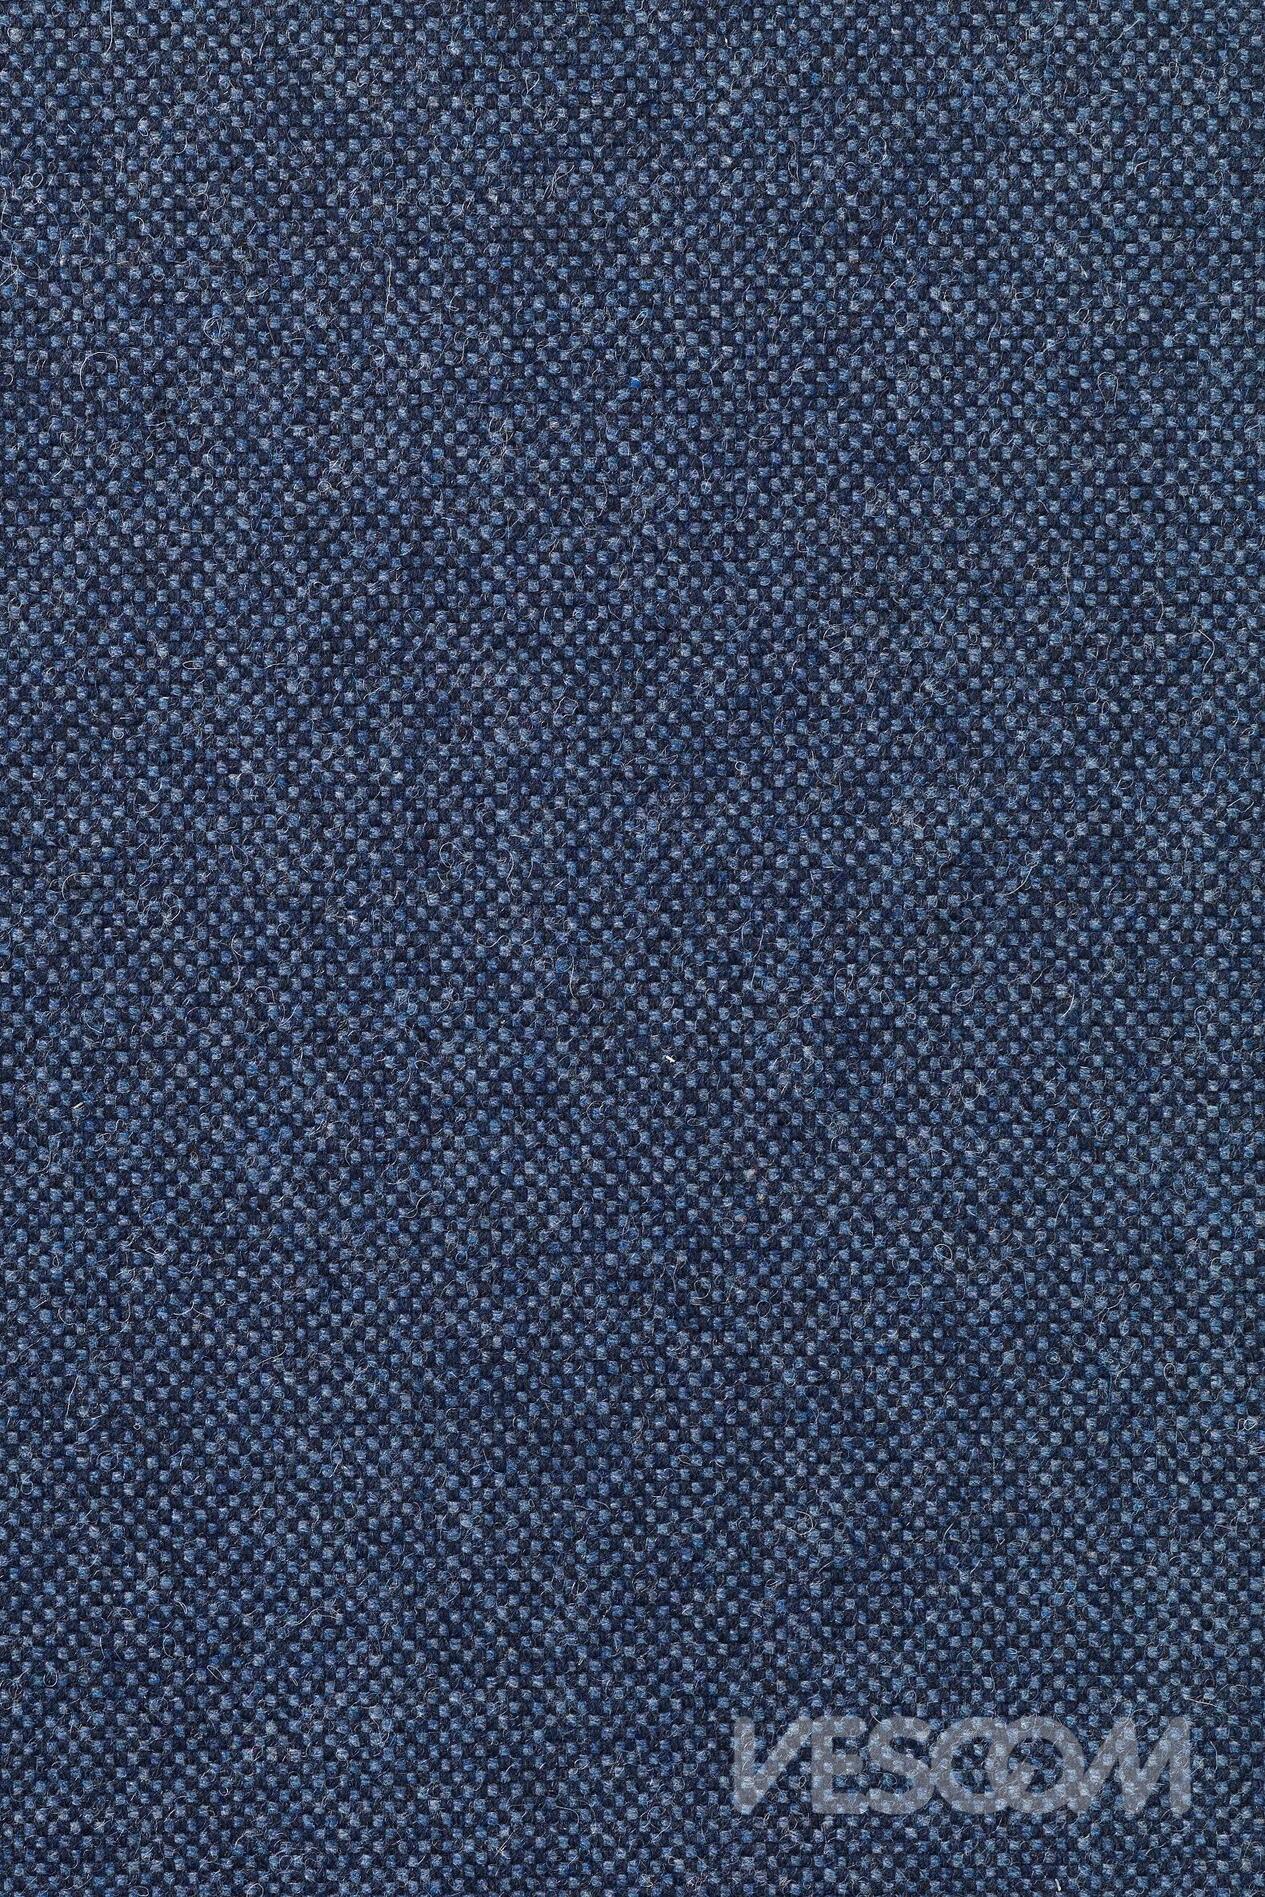 Vescom-Wolin-Upholstery-Fabric-7050.09.jpg